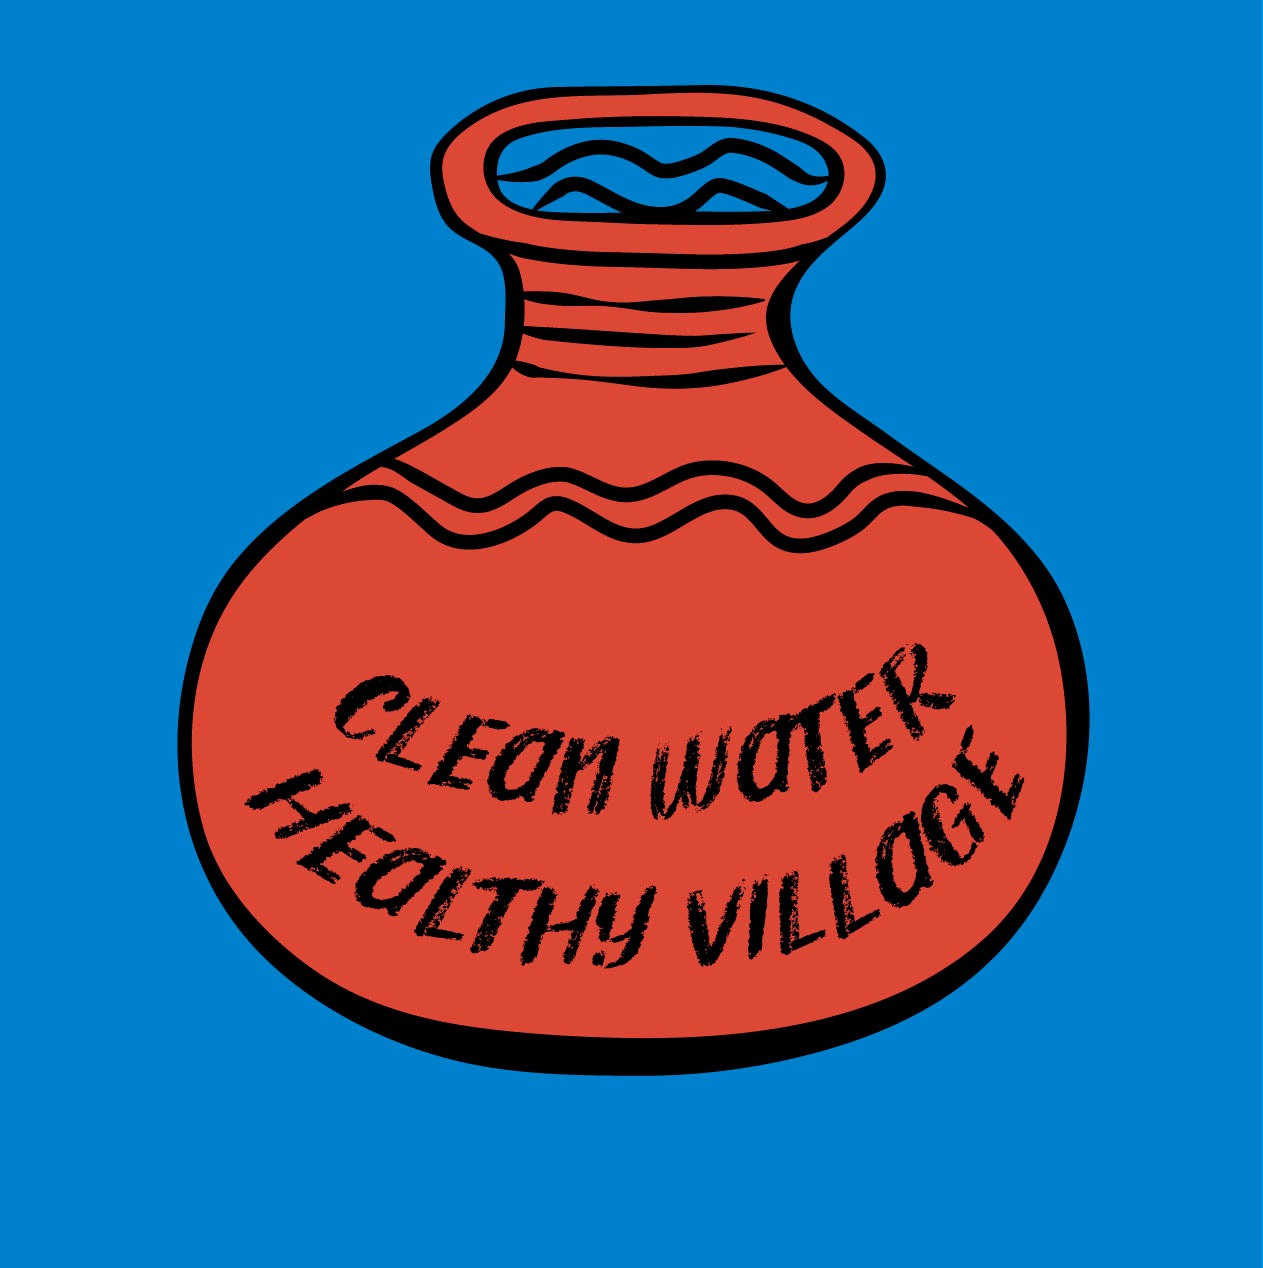 Clean Water Healthy Village